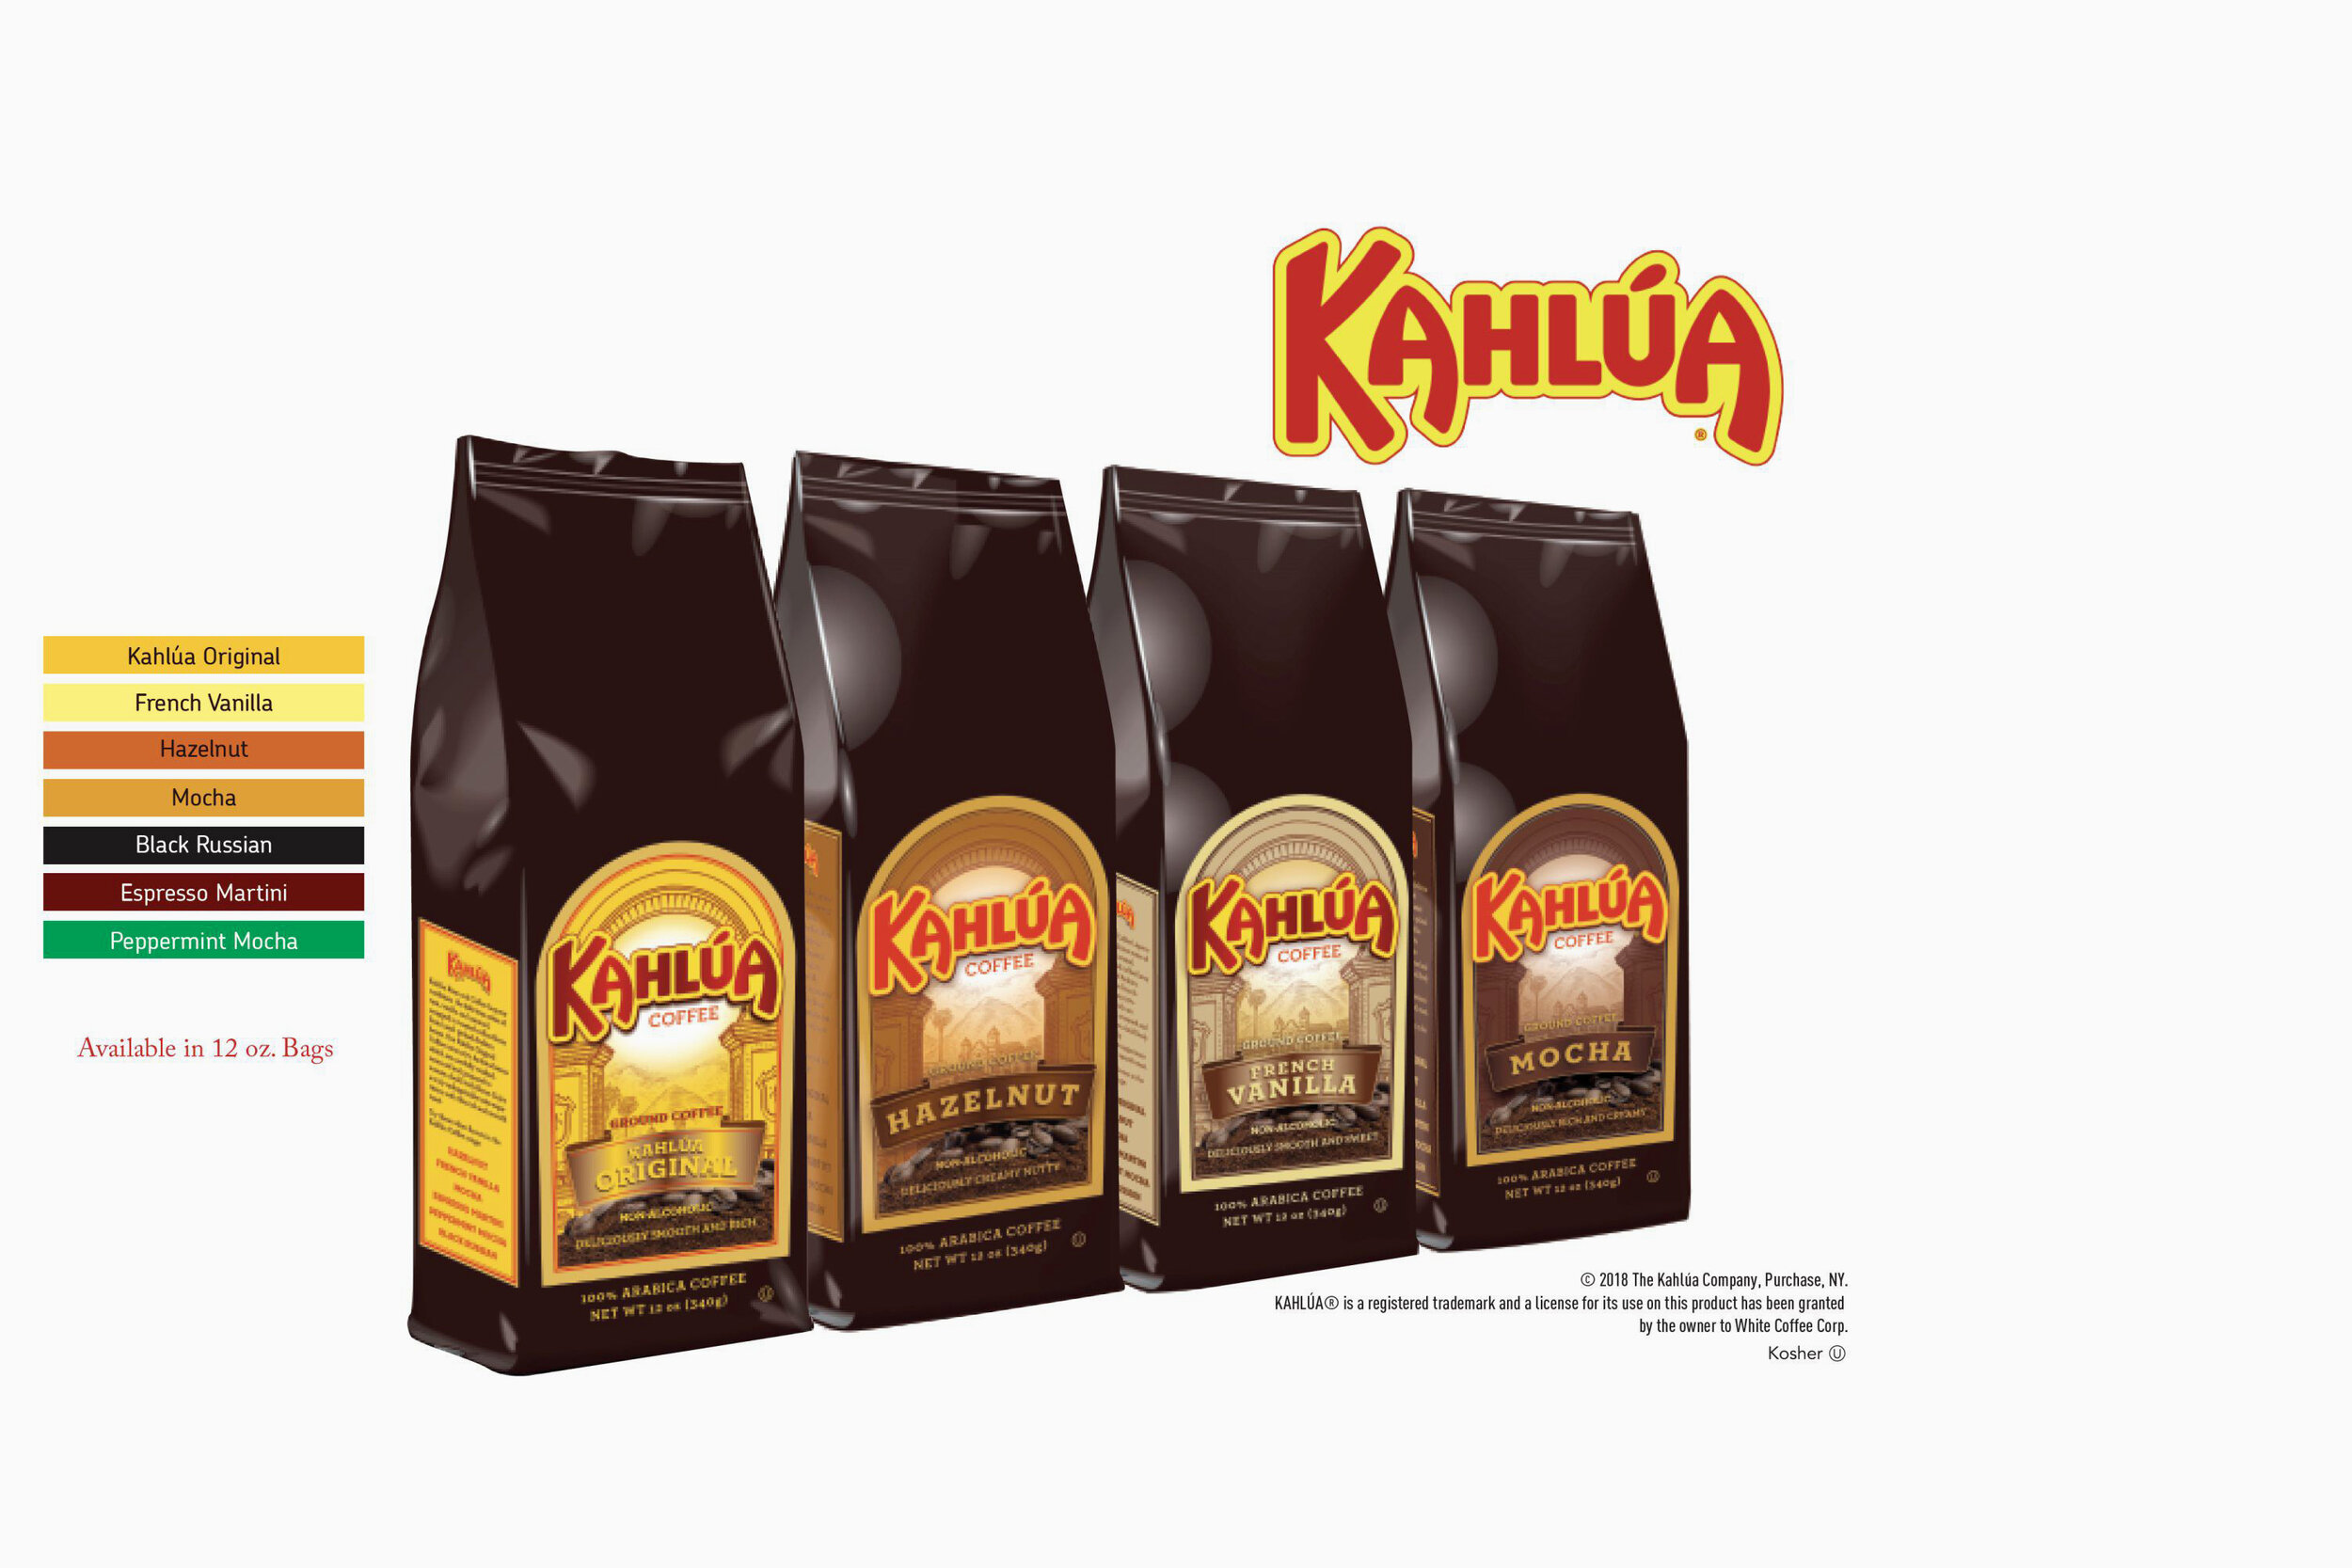 Coffee Licensing Companies